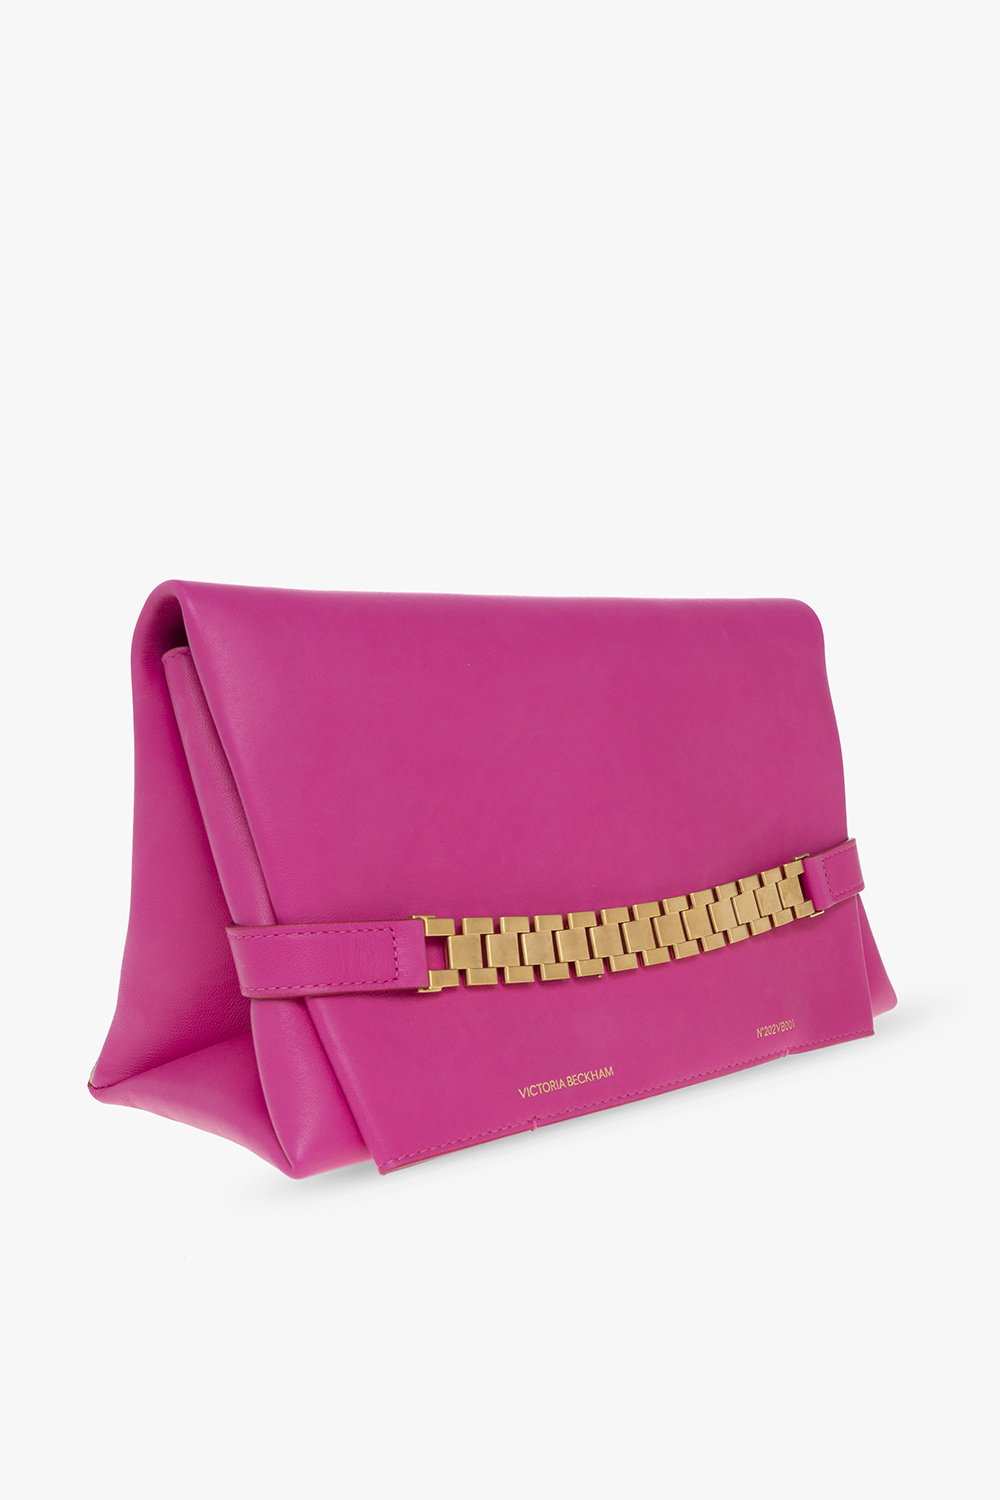 Victoria Beckham Leather handbag